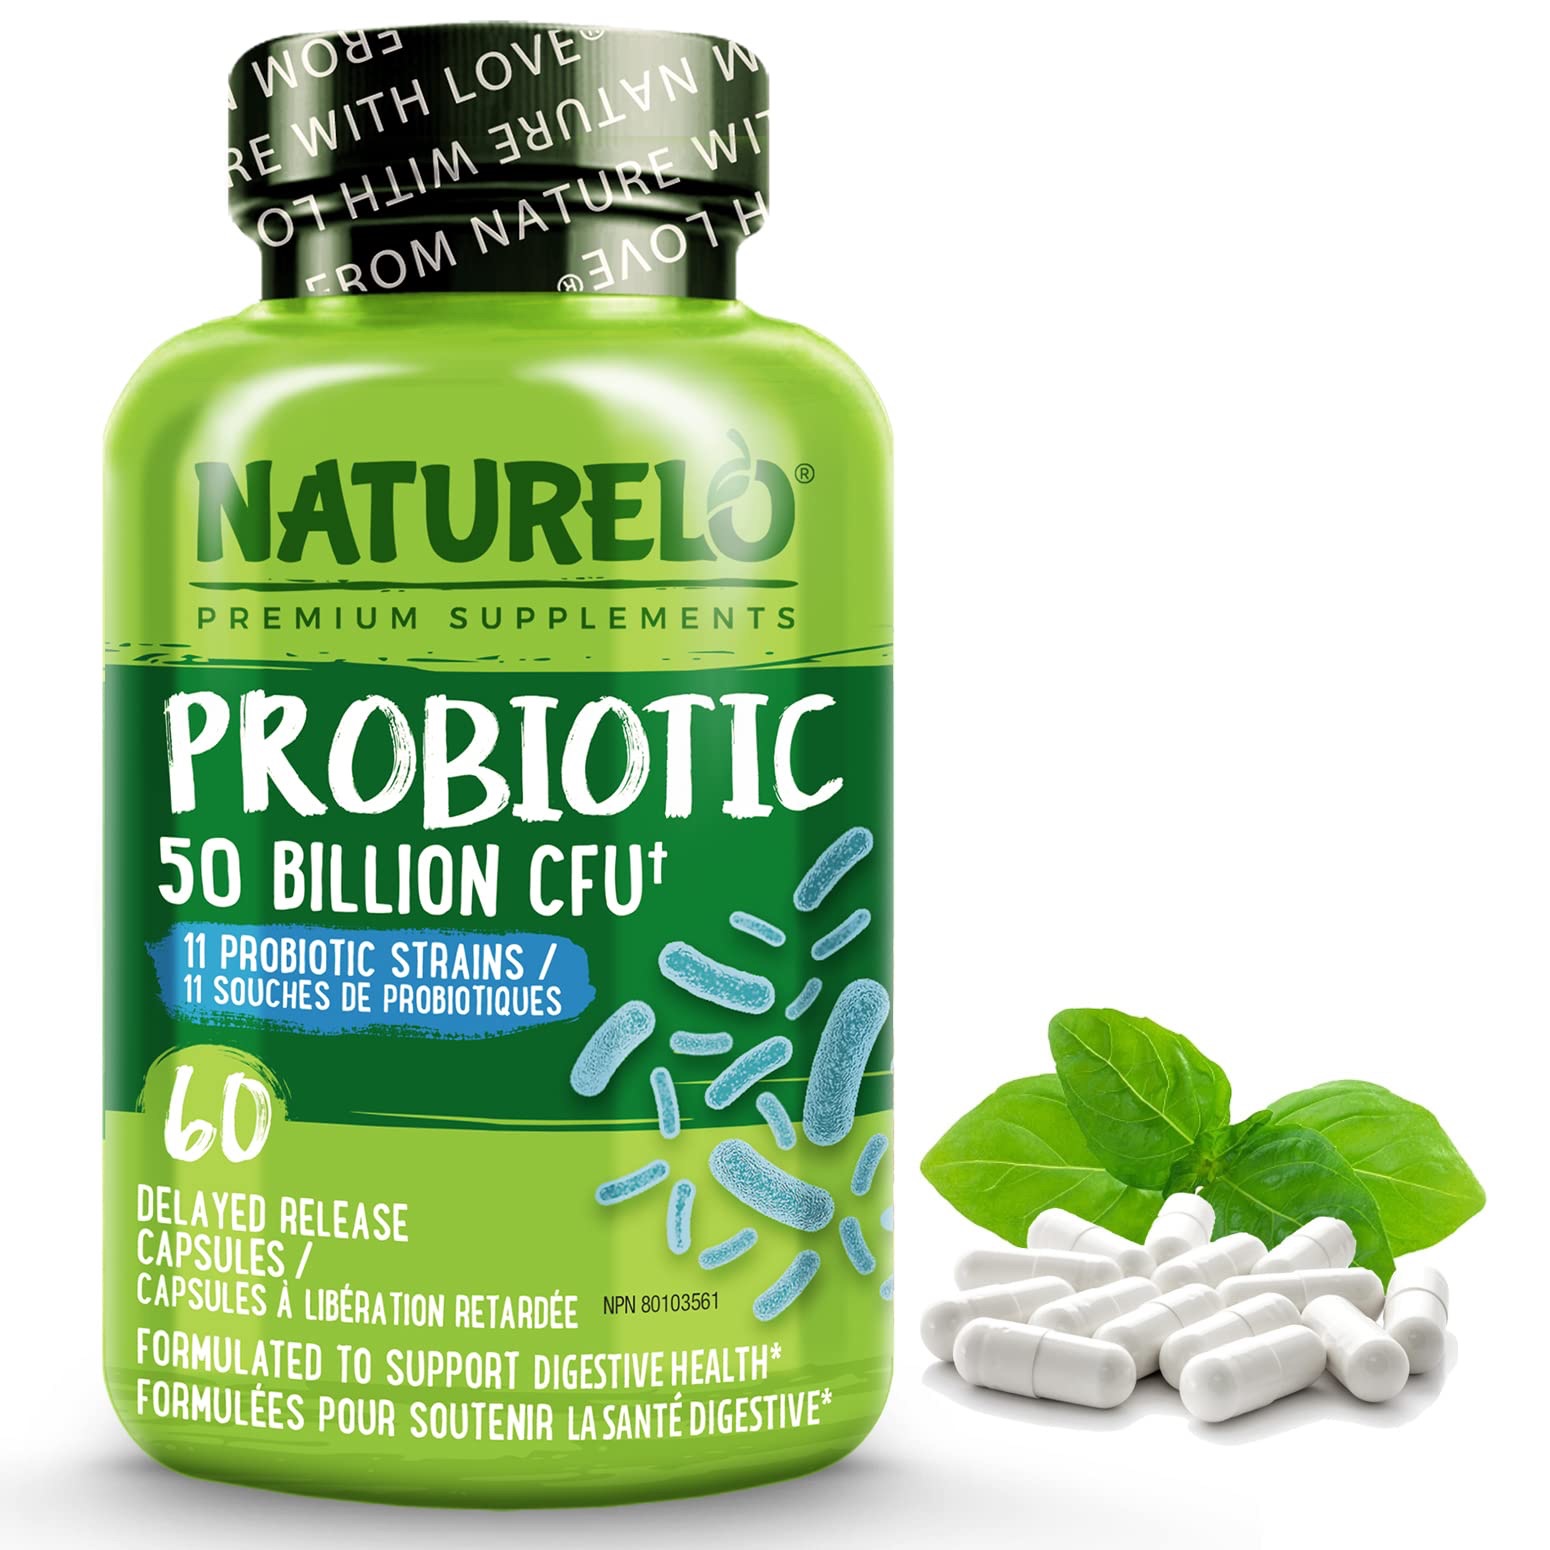 NATURELO Probiotic Supplement - 50 Billion CFU - 11 Strains - One Daily - Helps Support Digestive & Immune Health - Delayed Release - No Refrigeration Needed - 60 Vegan Capsules : Amazon.ca: Health & 